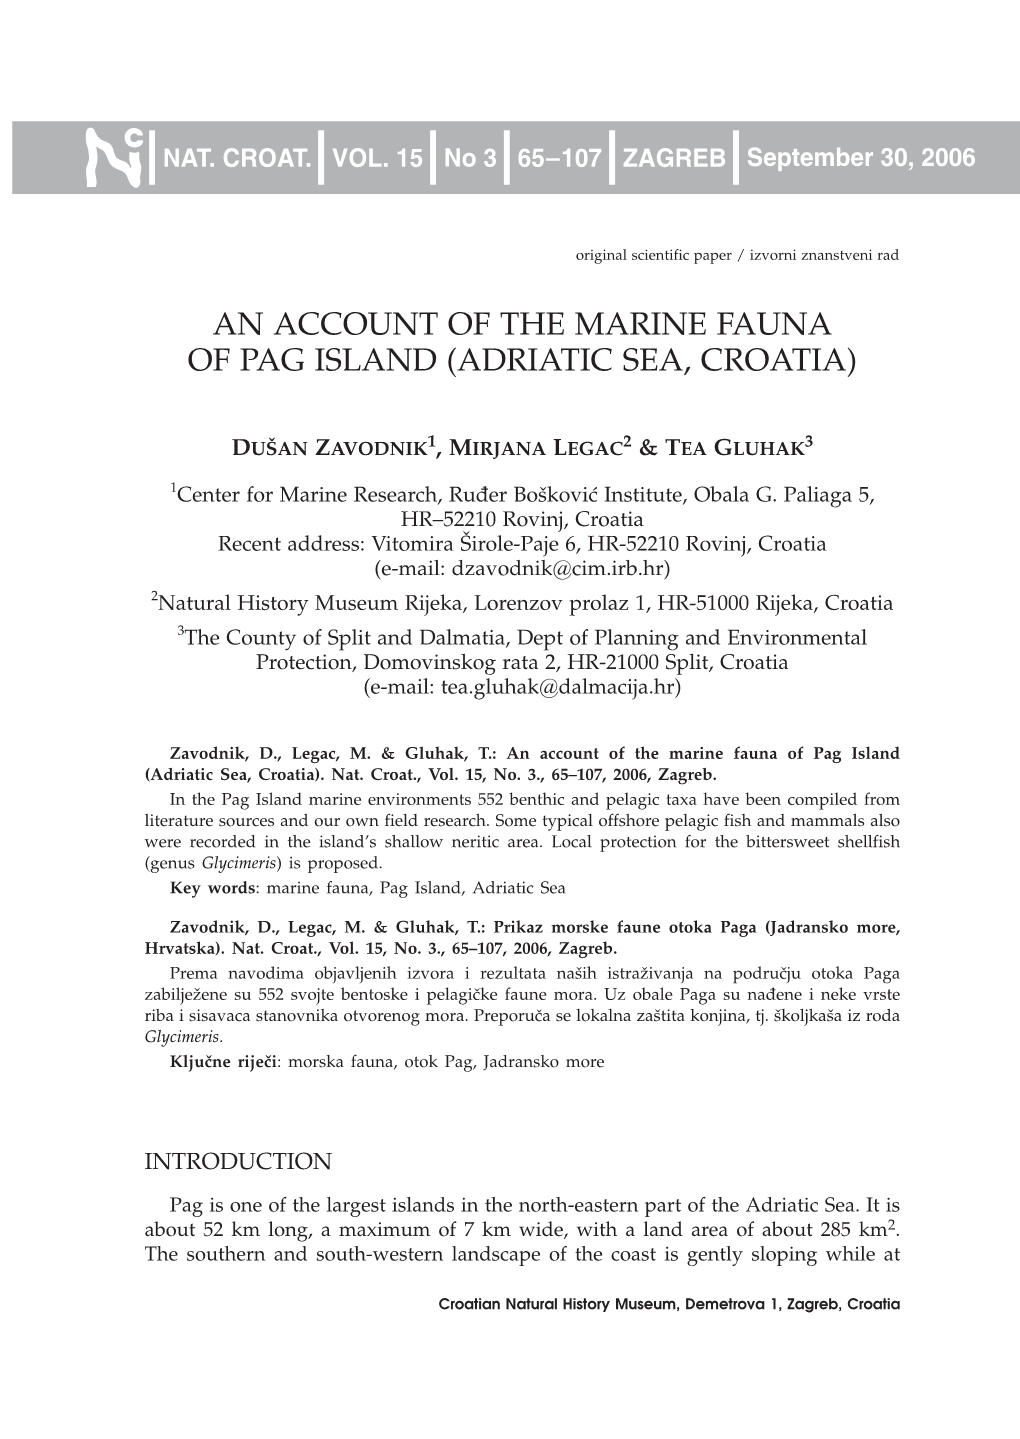 An Account of the Marine Fauna of Pag Island (Adriatic Sea, Croatia)